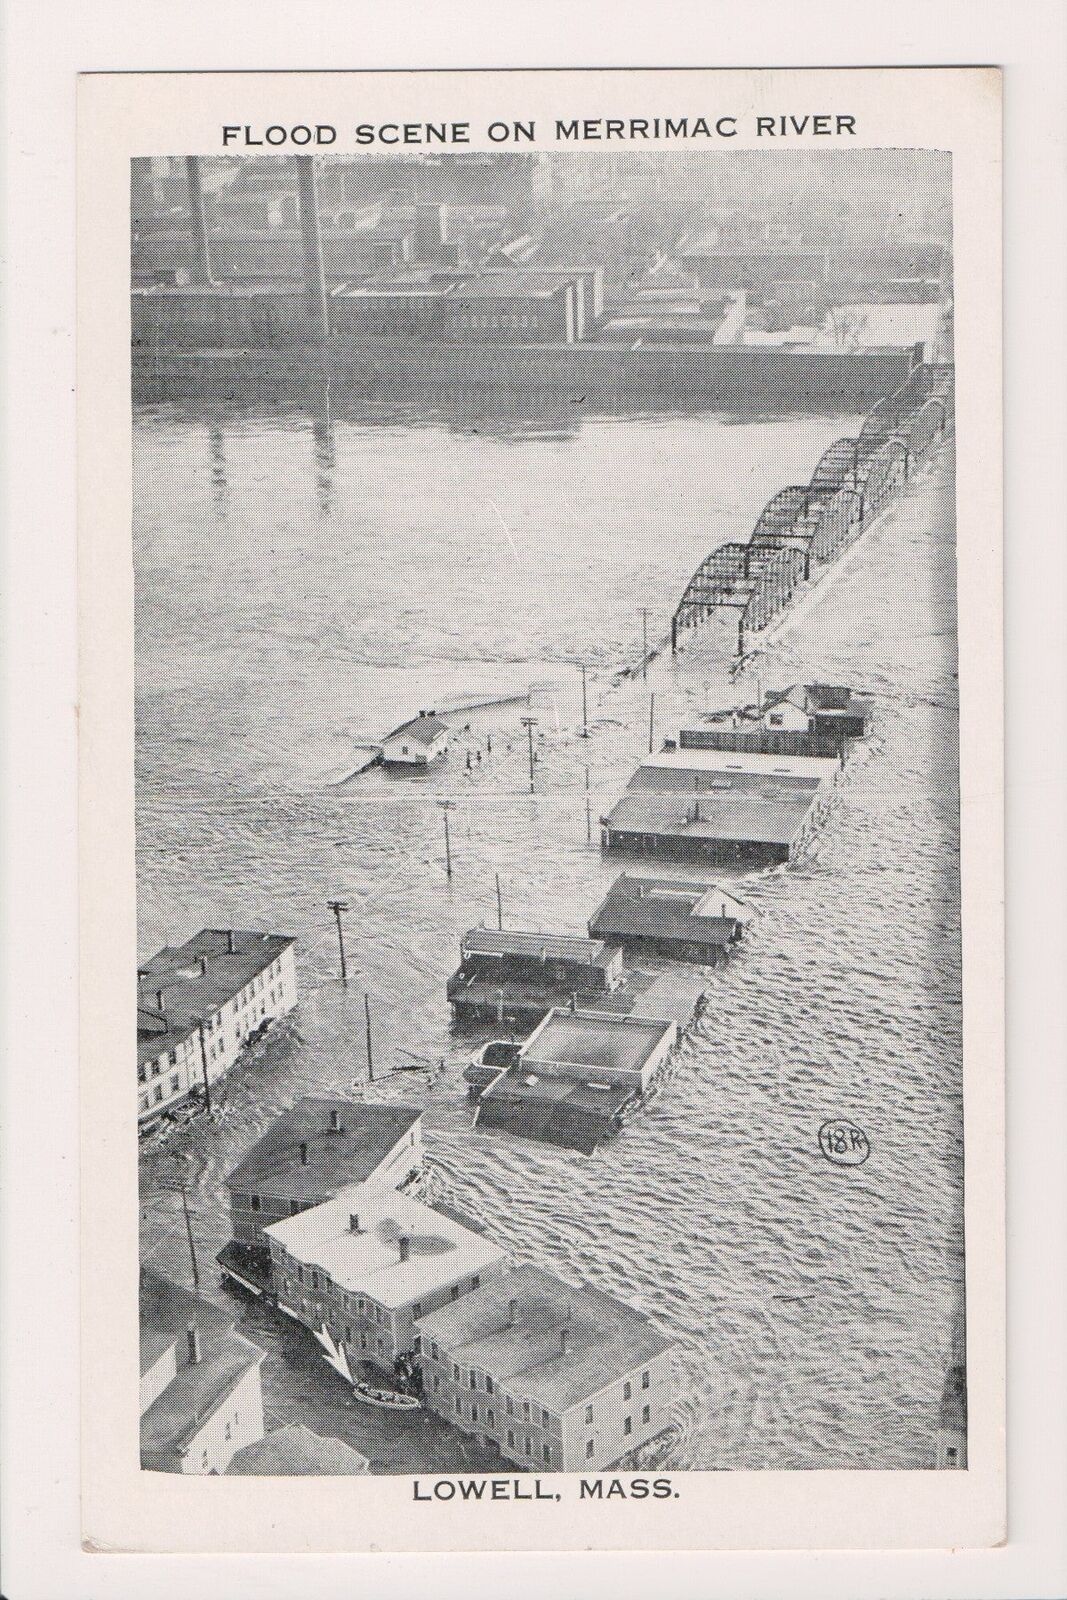 MA, Lowell - Flood scene on Merrimac River- Tichnor Bros postcard